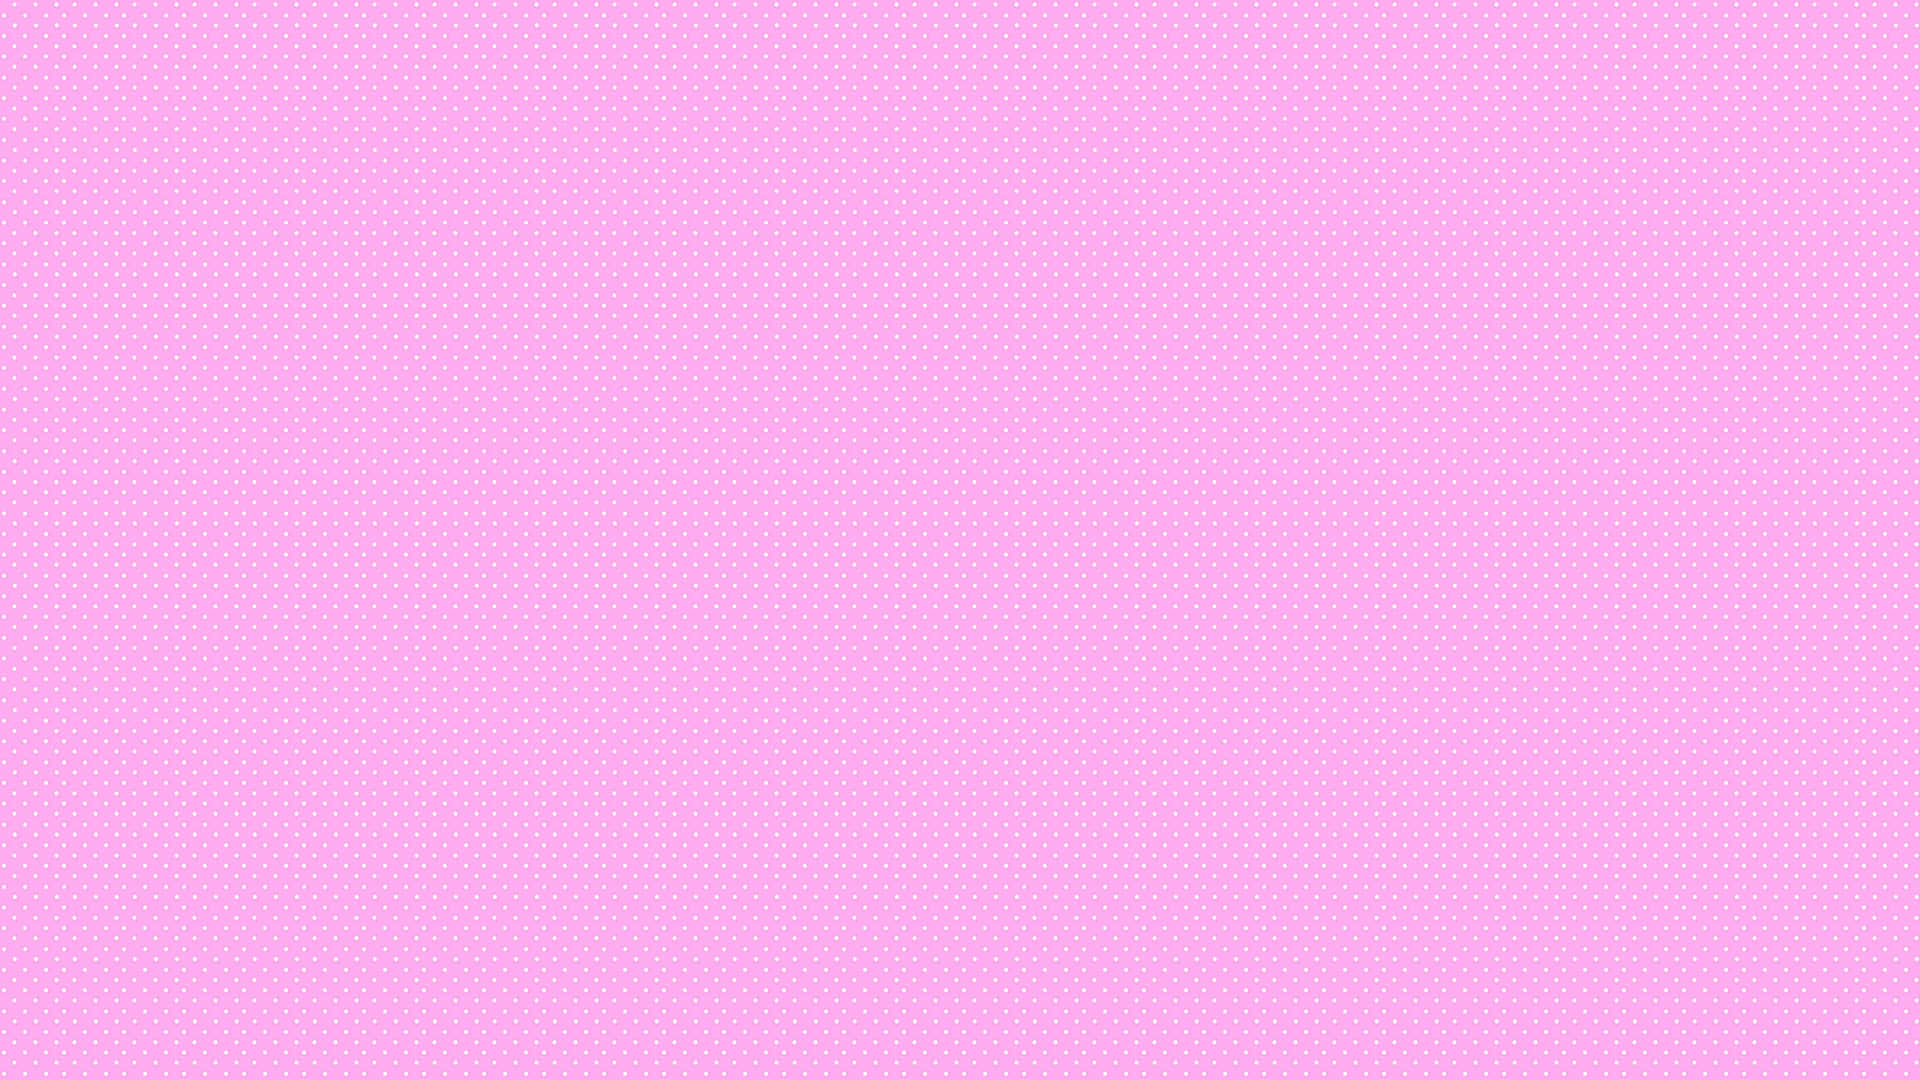 Pink Plain Aesthetic Tumblr Background